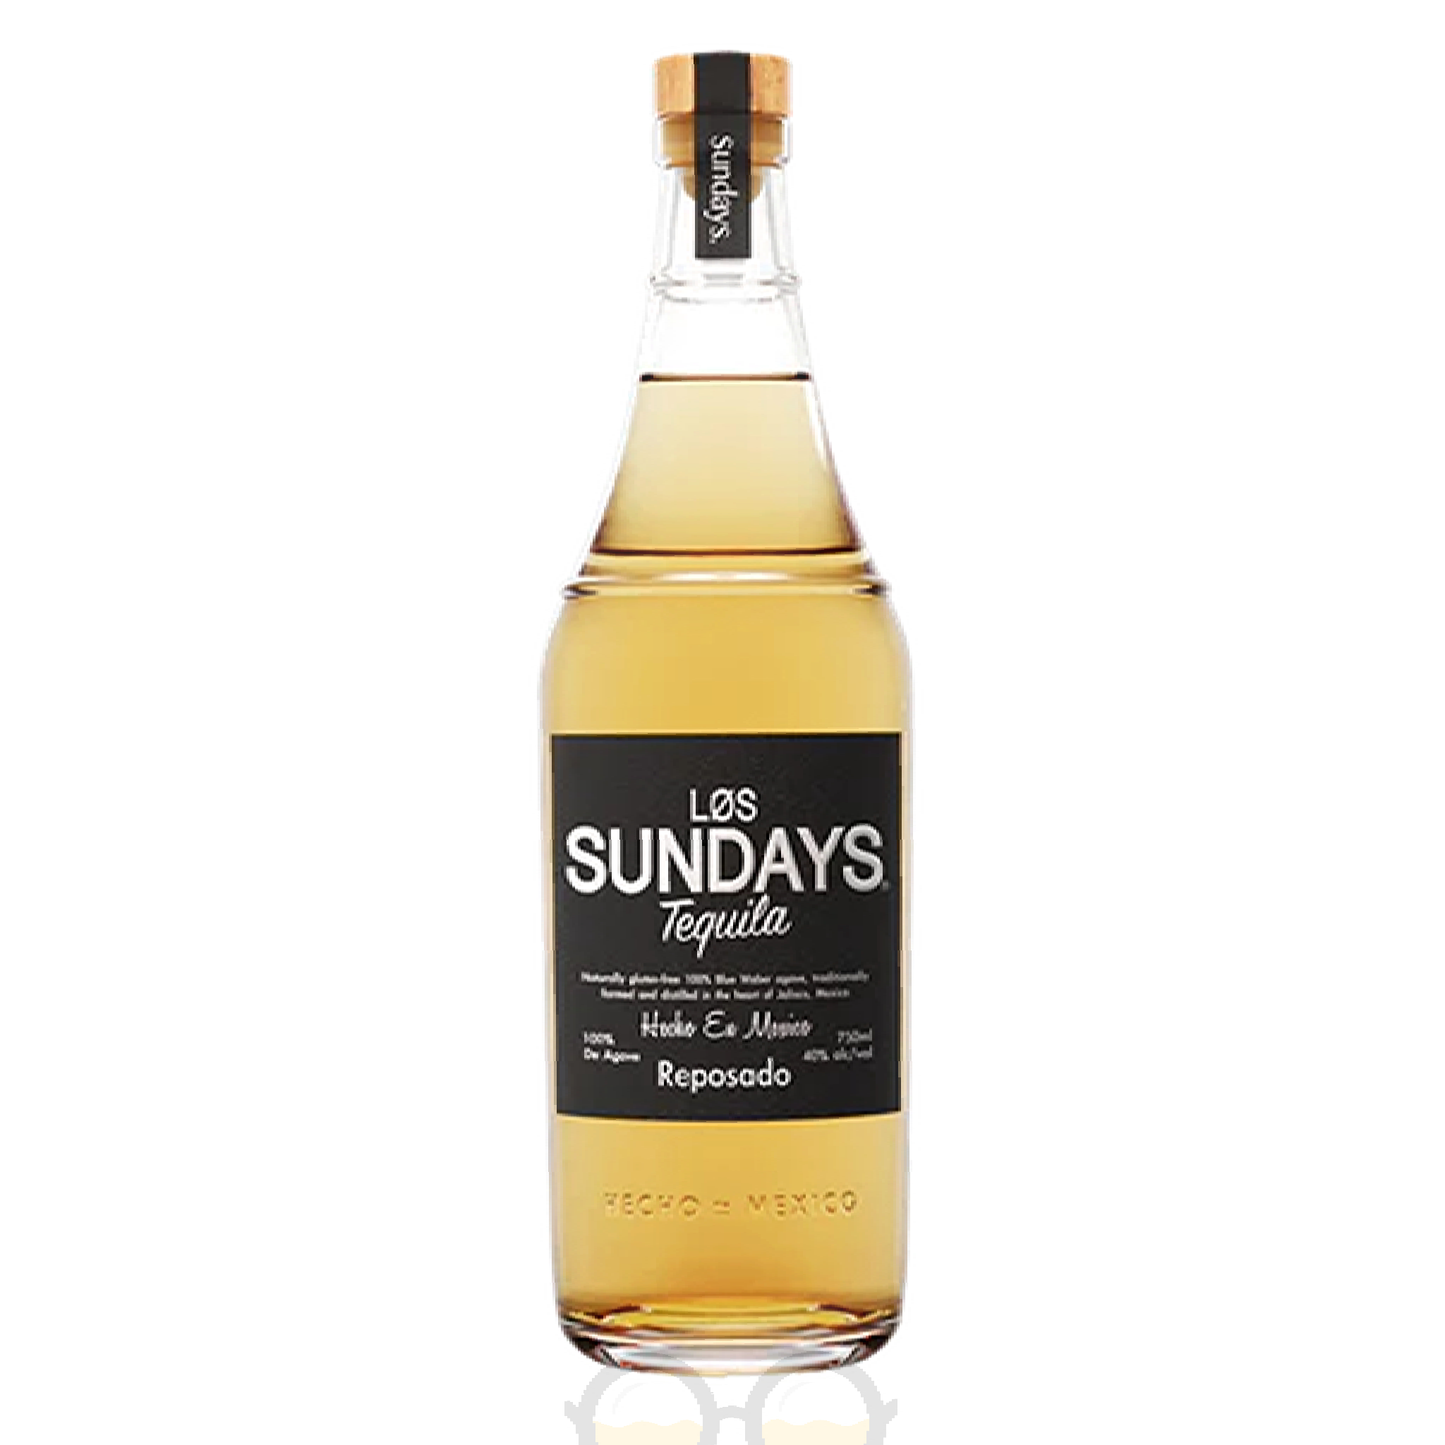 Los Sundays Company Los Sundays Reposado Tequila - Liquor Geeks